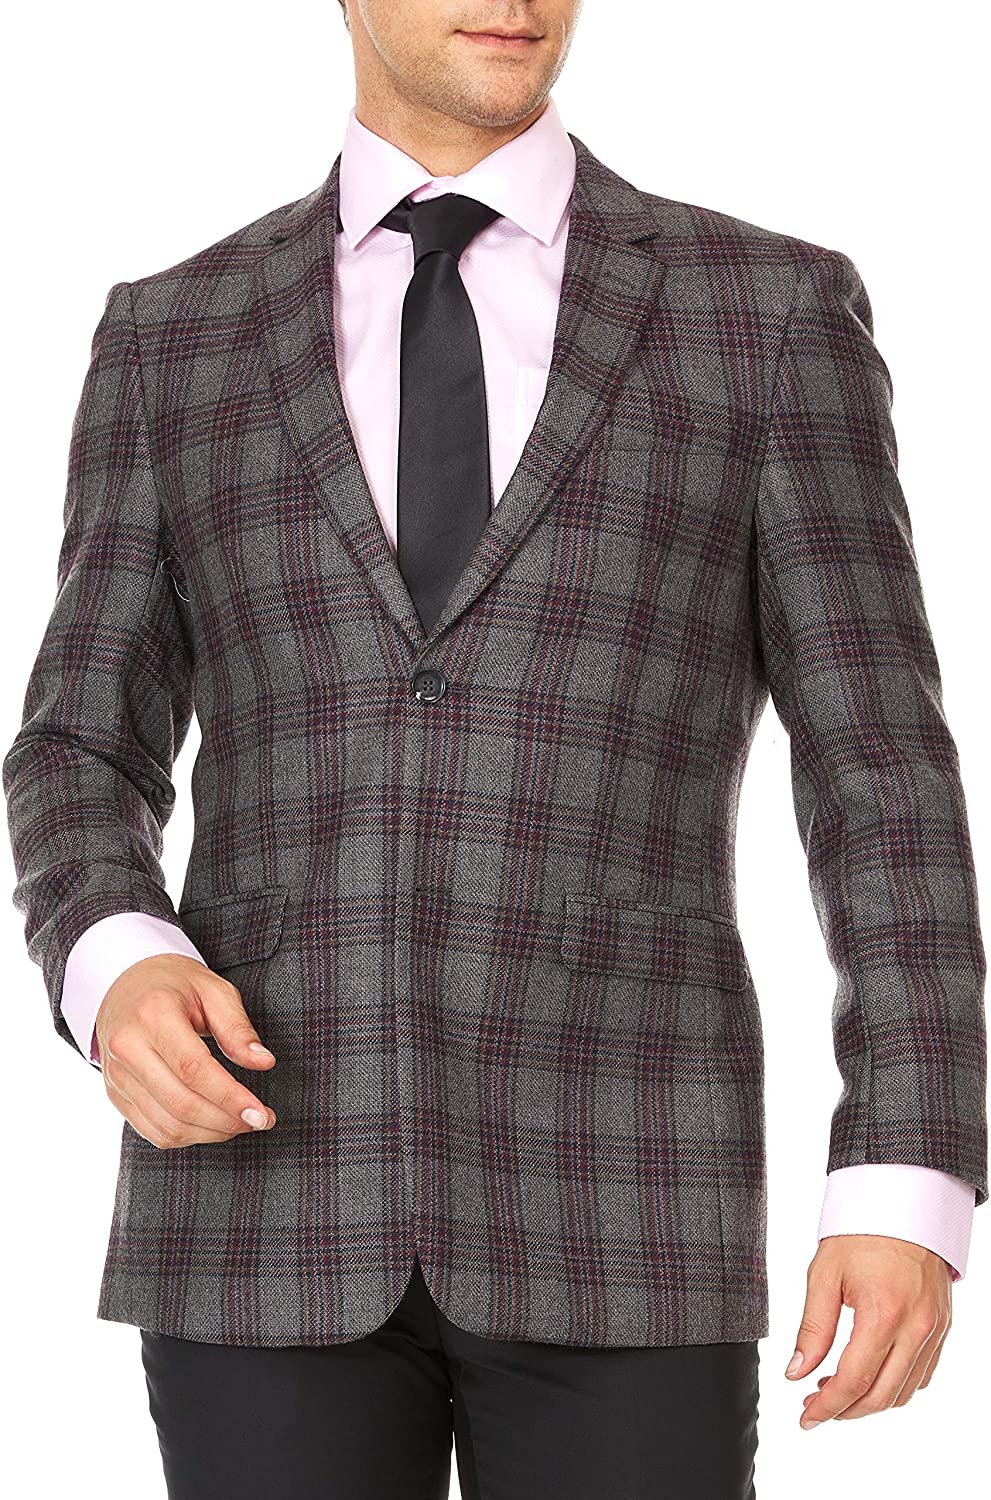 Adam Baker Men's Single Breasted 100% Wool Ultra Slim Fit Blazer/Sport Coat - Brown Plaid